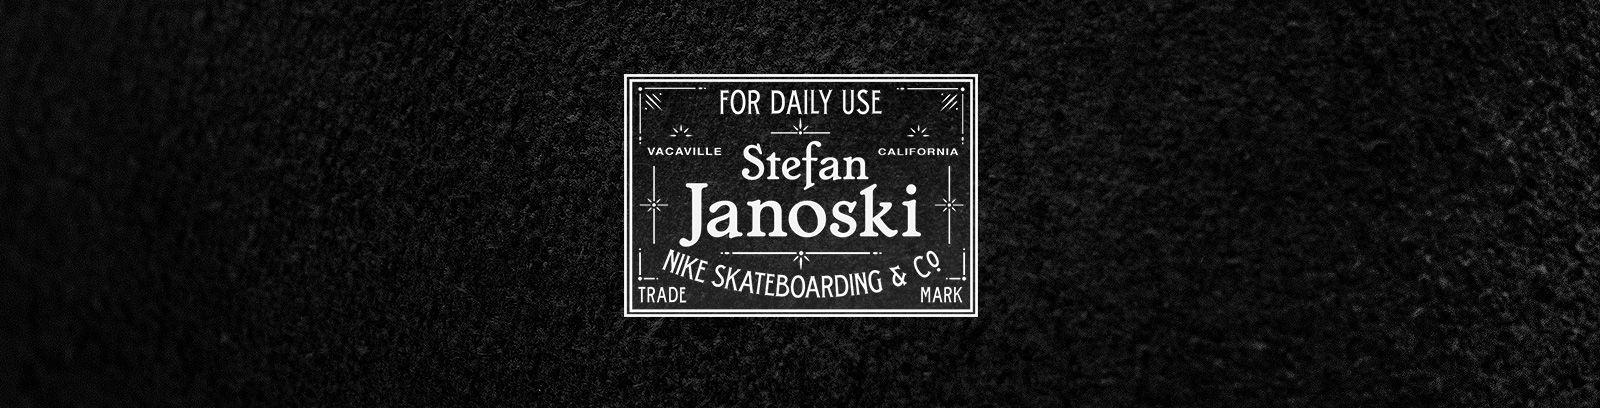 Nike Skateboarding Logo - Stefan Janoski. Nike SB Team. Nike.com